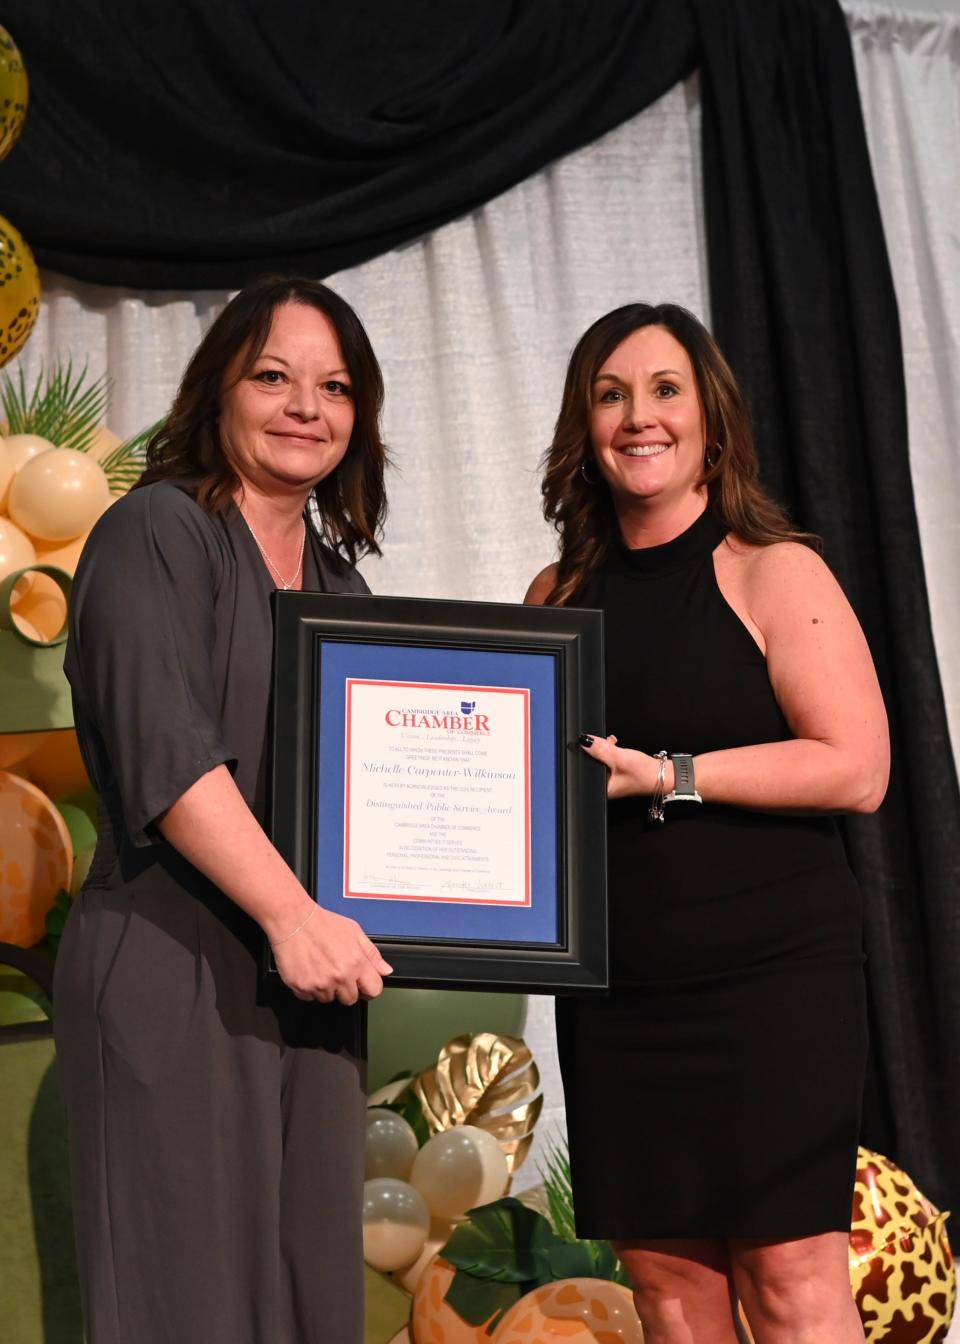 Michelle Carpenter-Wilkinson received the Distinguished Public Service Award from Jennifer Vincent.